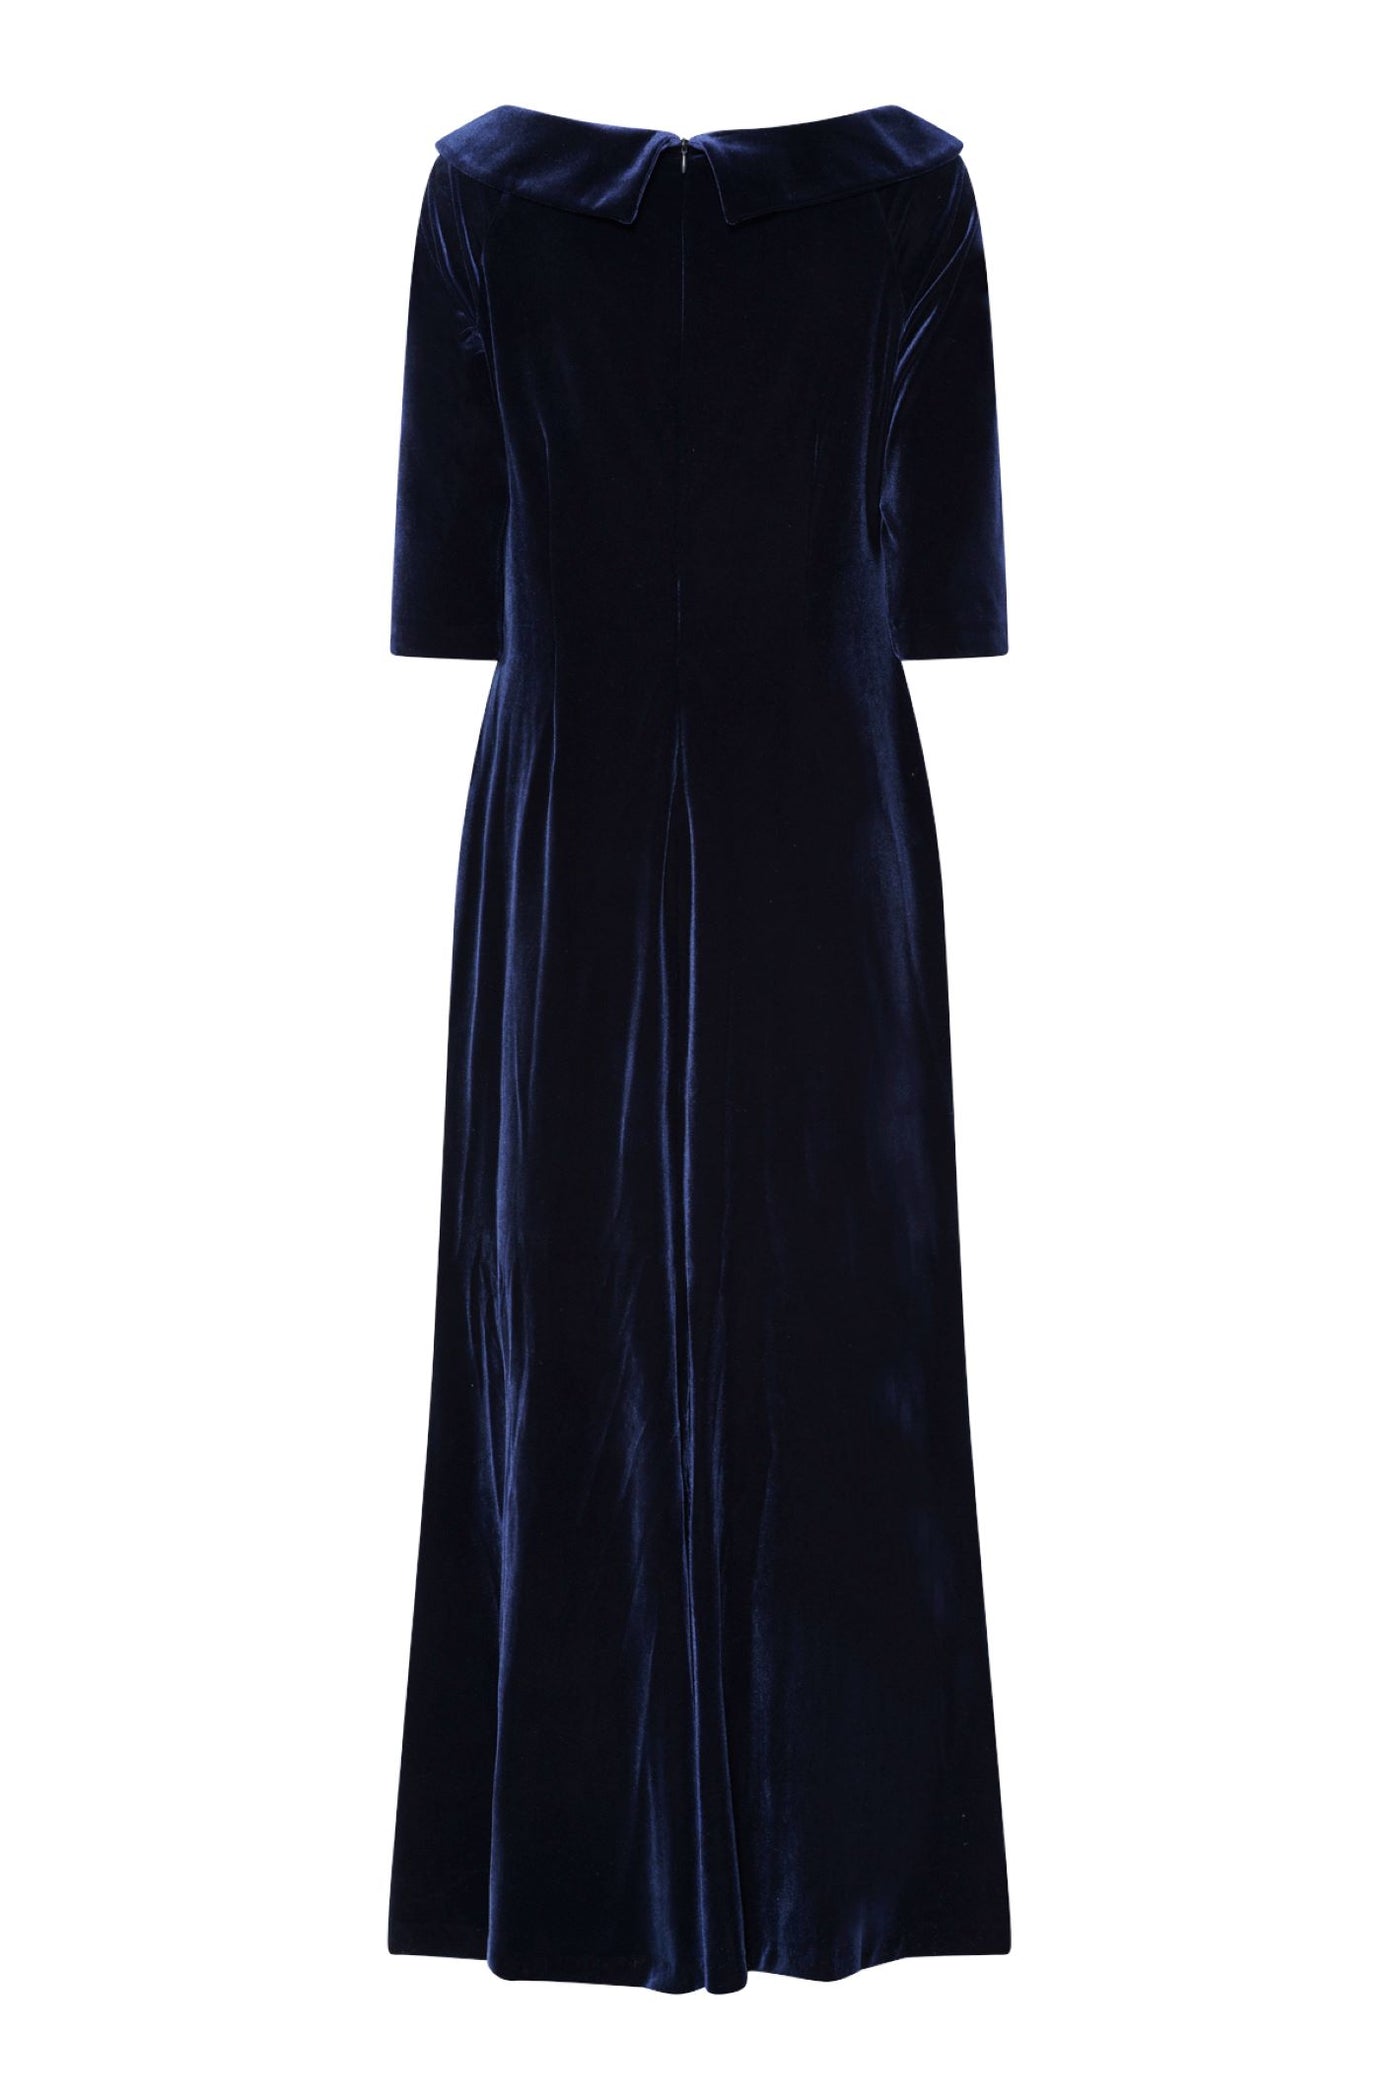 Tia 78735 Midnight Blue Long, Sleeved, Wide Neck Evening Dress in Velvet